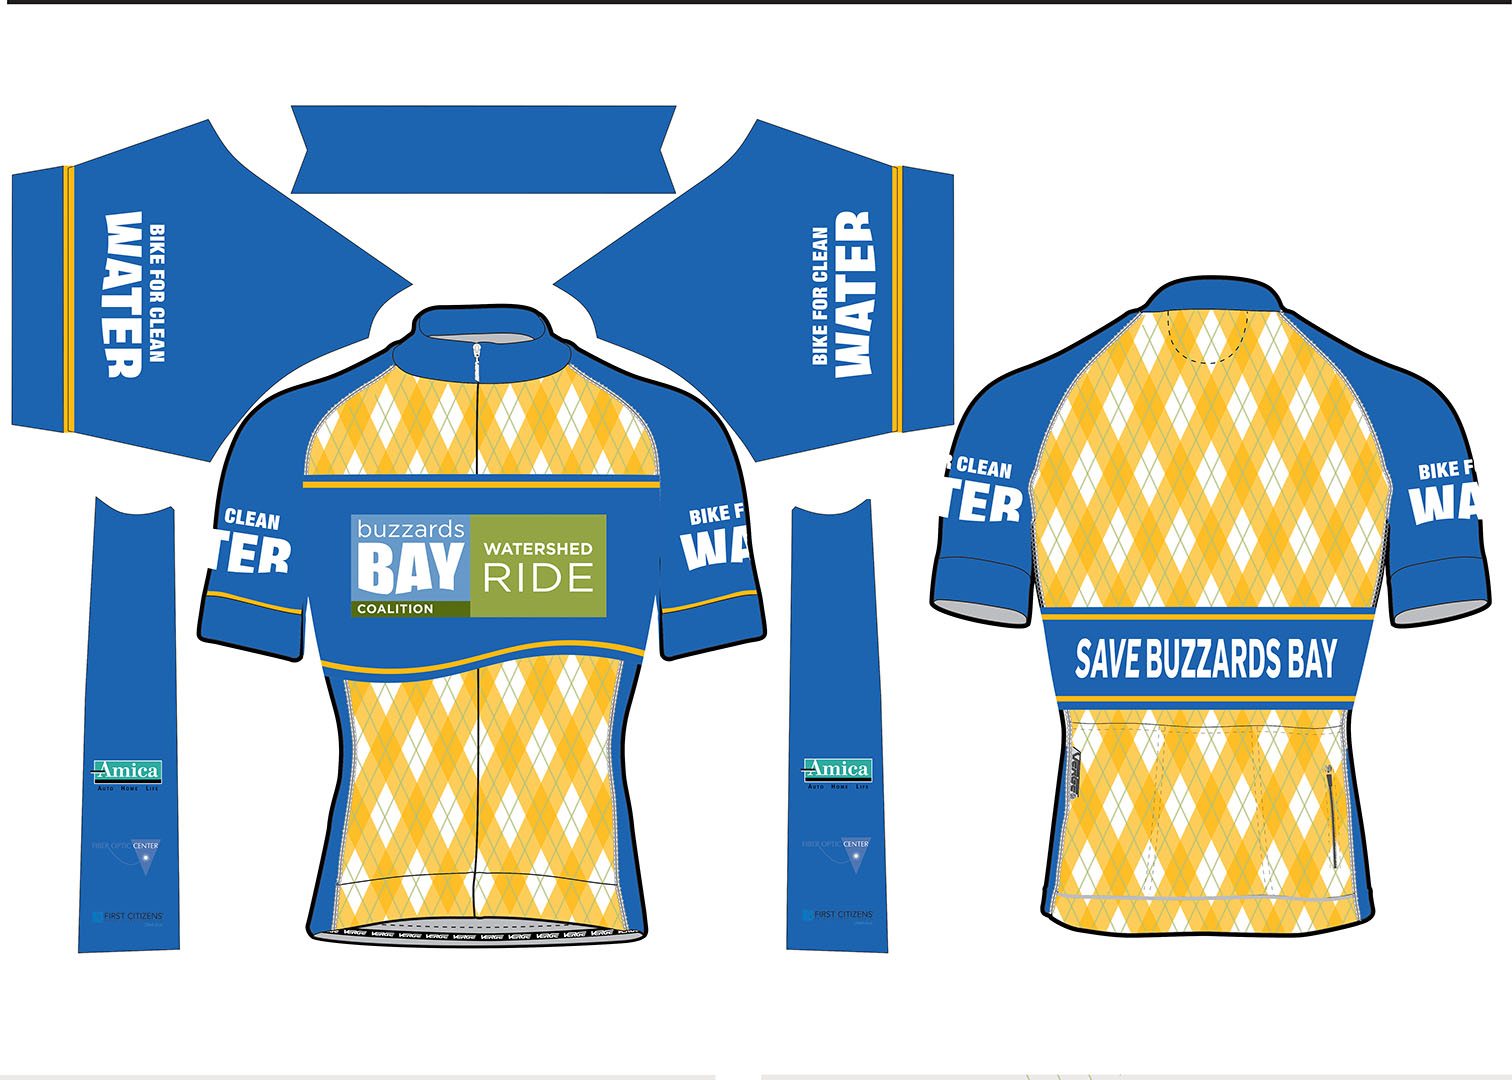 Buzzards Bay Coalition Ride Jersey 2018